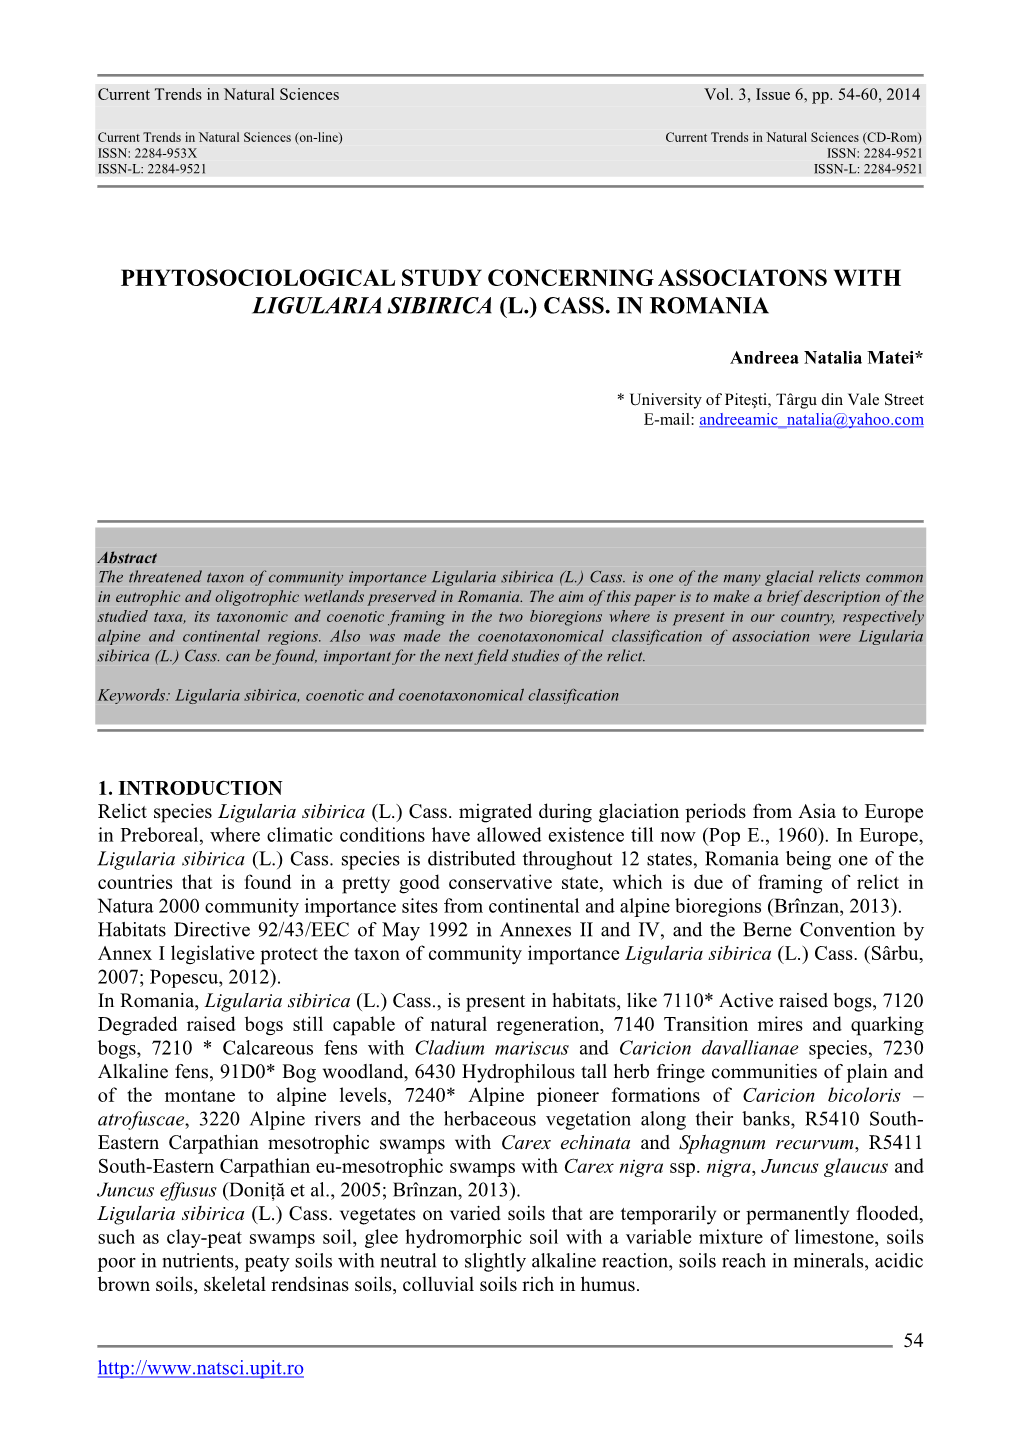 Phytosociological Study Concerning Associatons with Ligularia Sibirica (L.) Cass